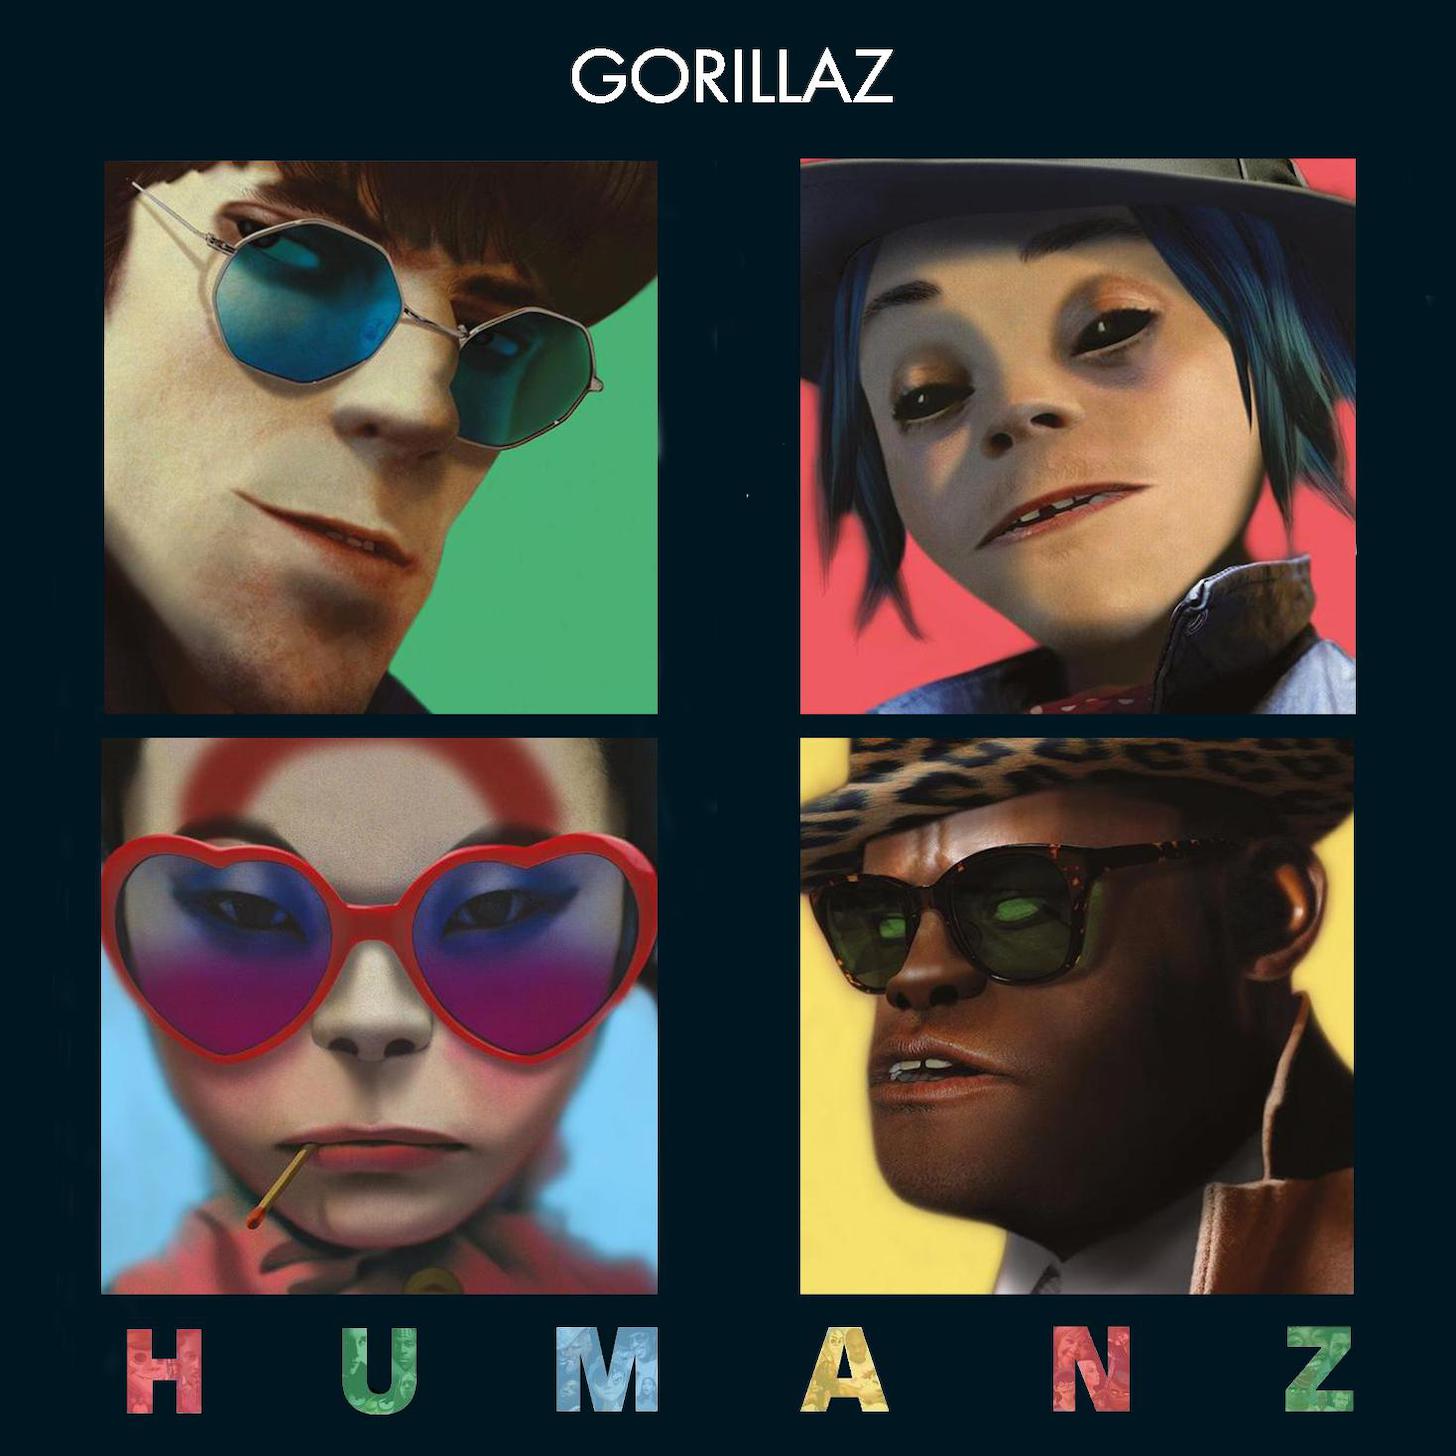 Gorillaz as Humanz